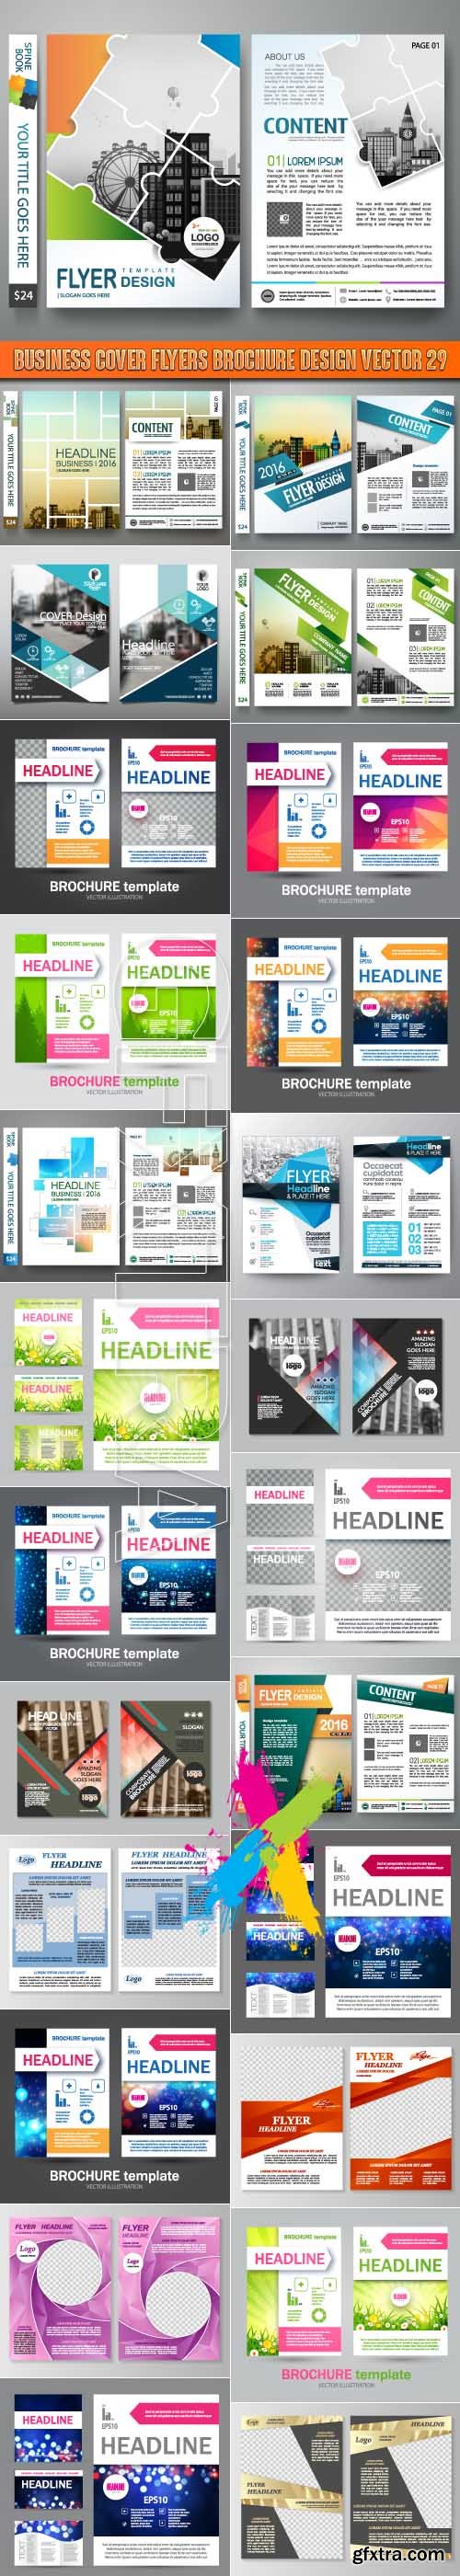 Business cover flyers brochure design vector 29